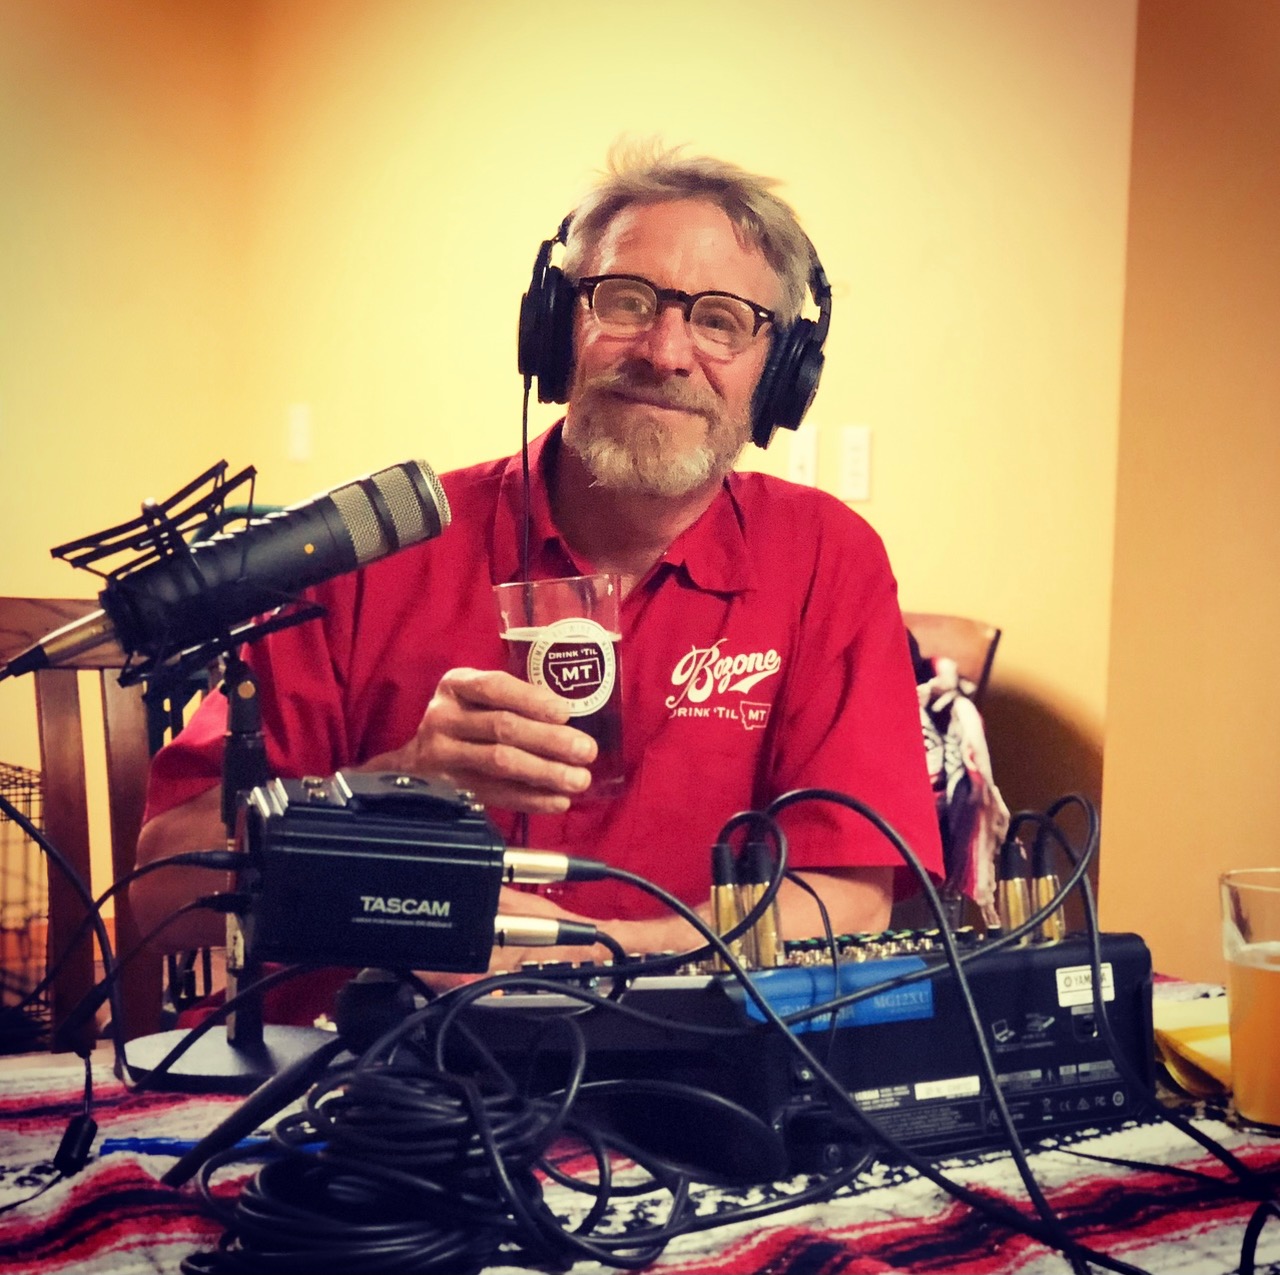 Barbara Groom Lost Coast Brewery - Craft Beer Podcast Episode 124 by Steven Shomler 